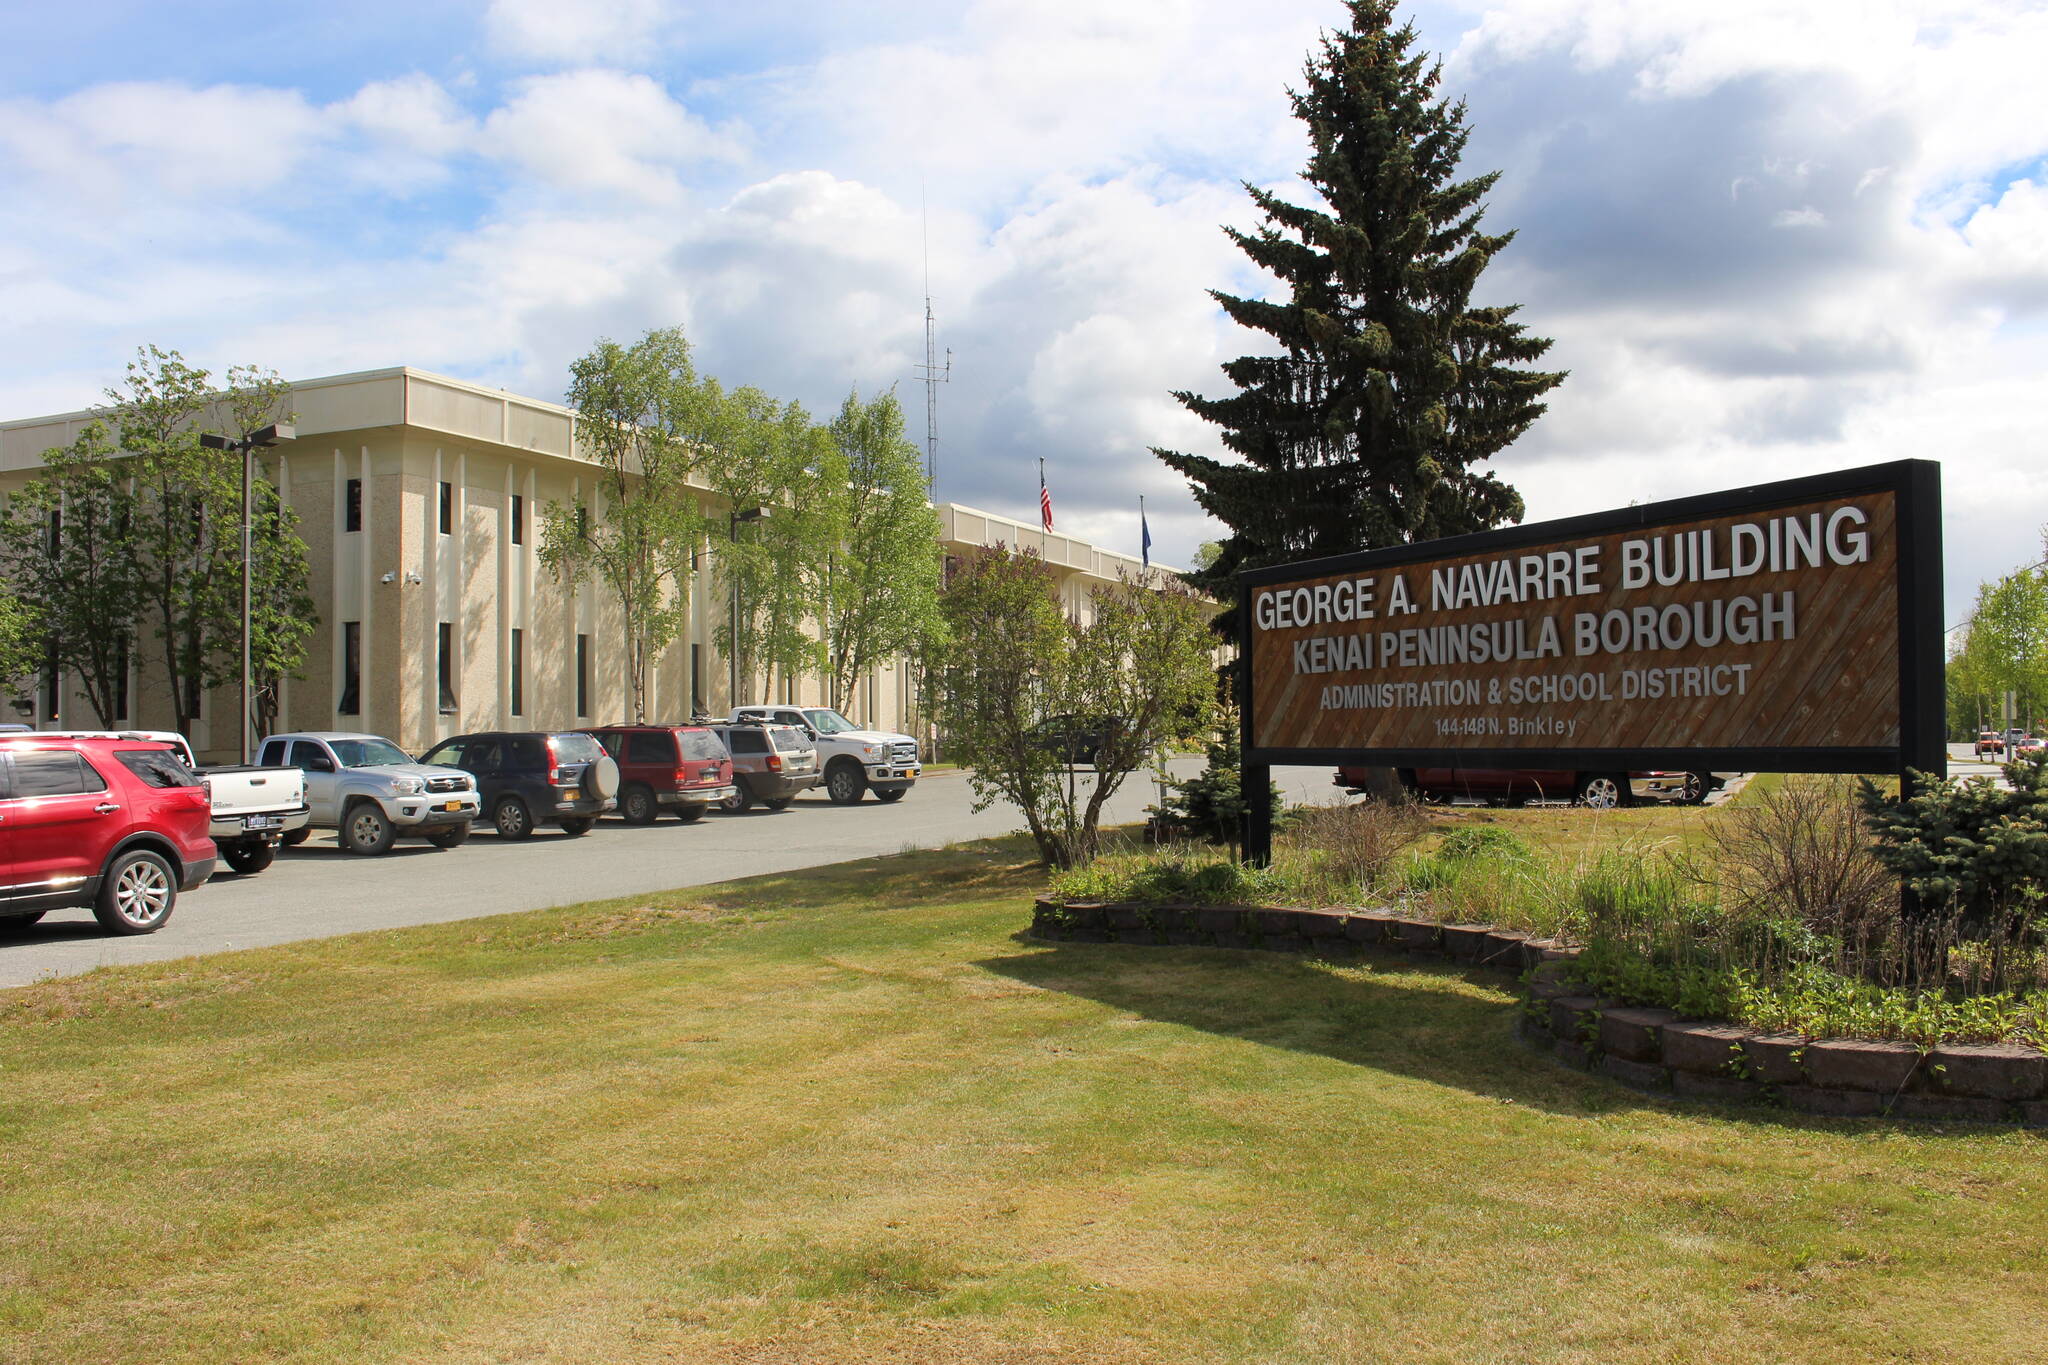 The entrance to the Kenai Peninsula Borough building in Soldotna, Alaska, is seen on June 1, 2020. (Peninsula Clarion file)